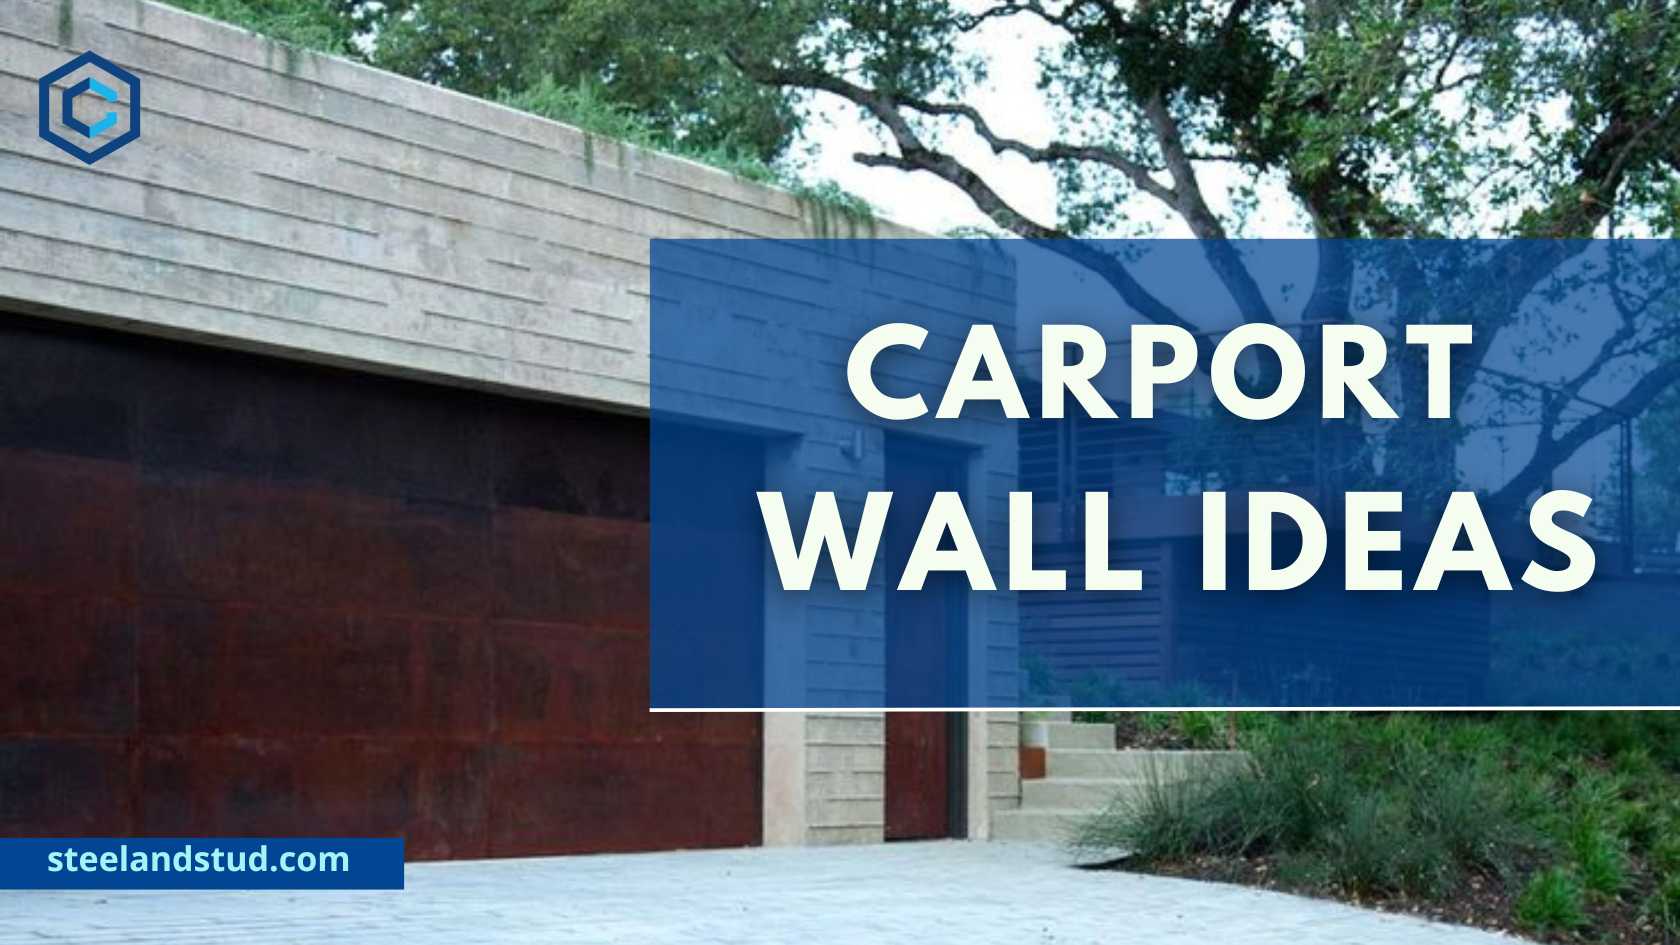 Carport Wall Ideas